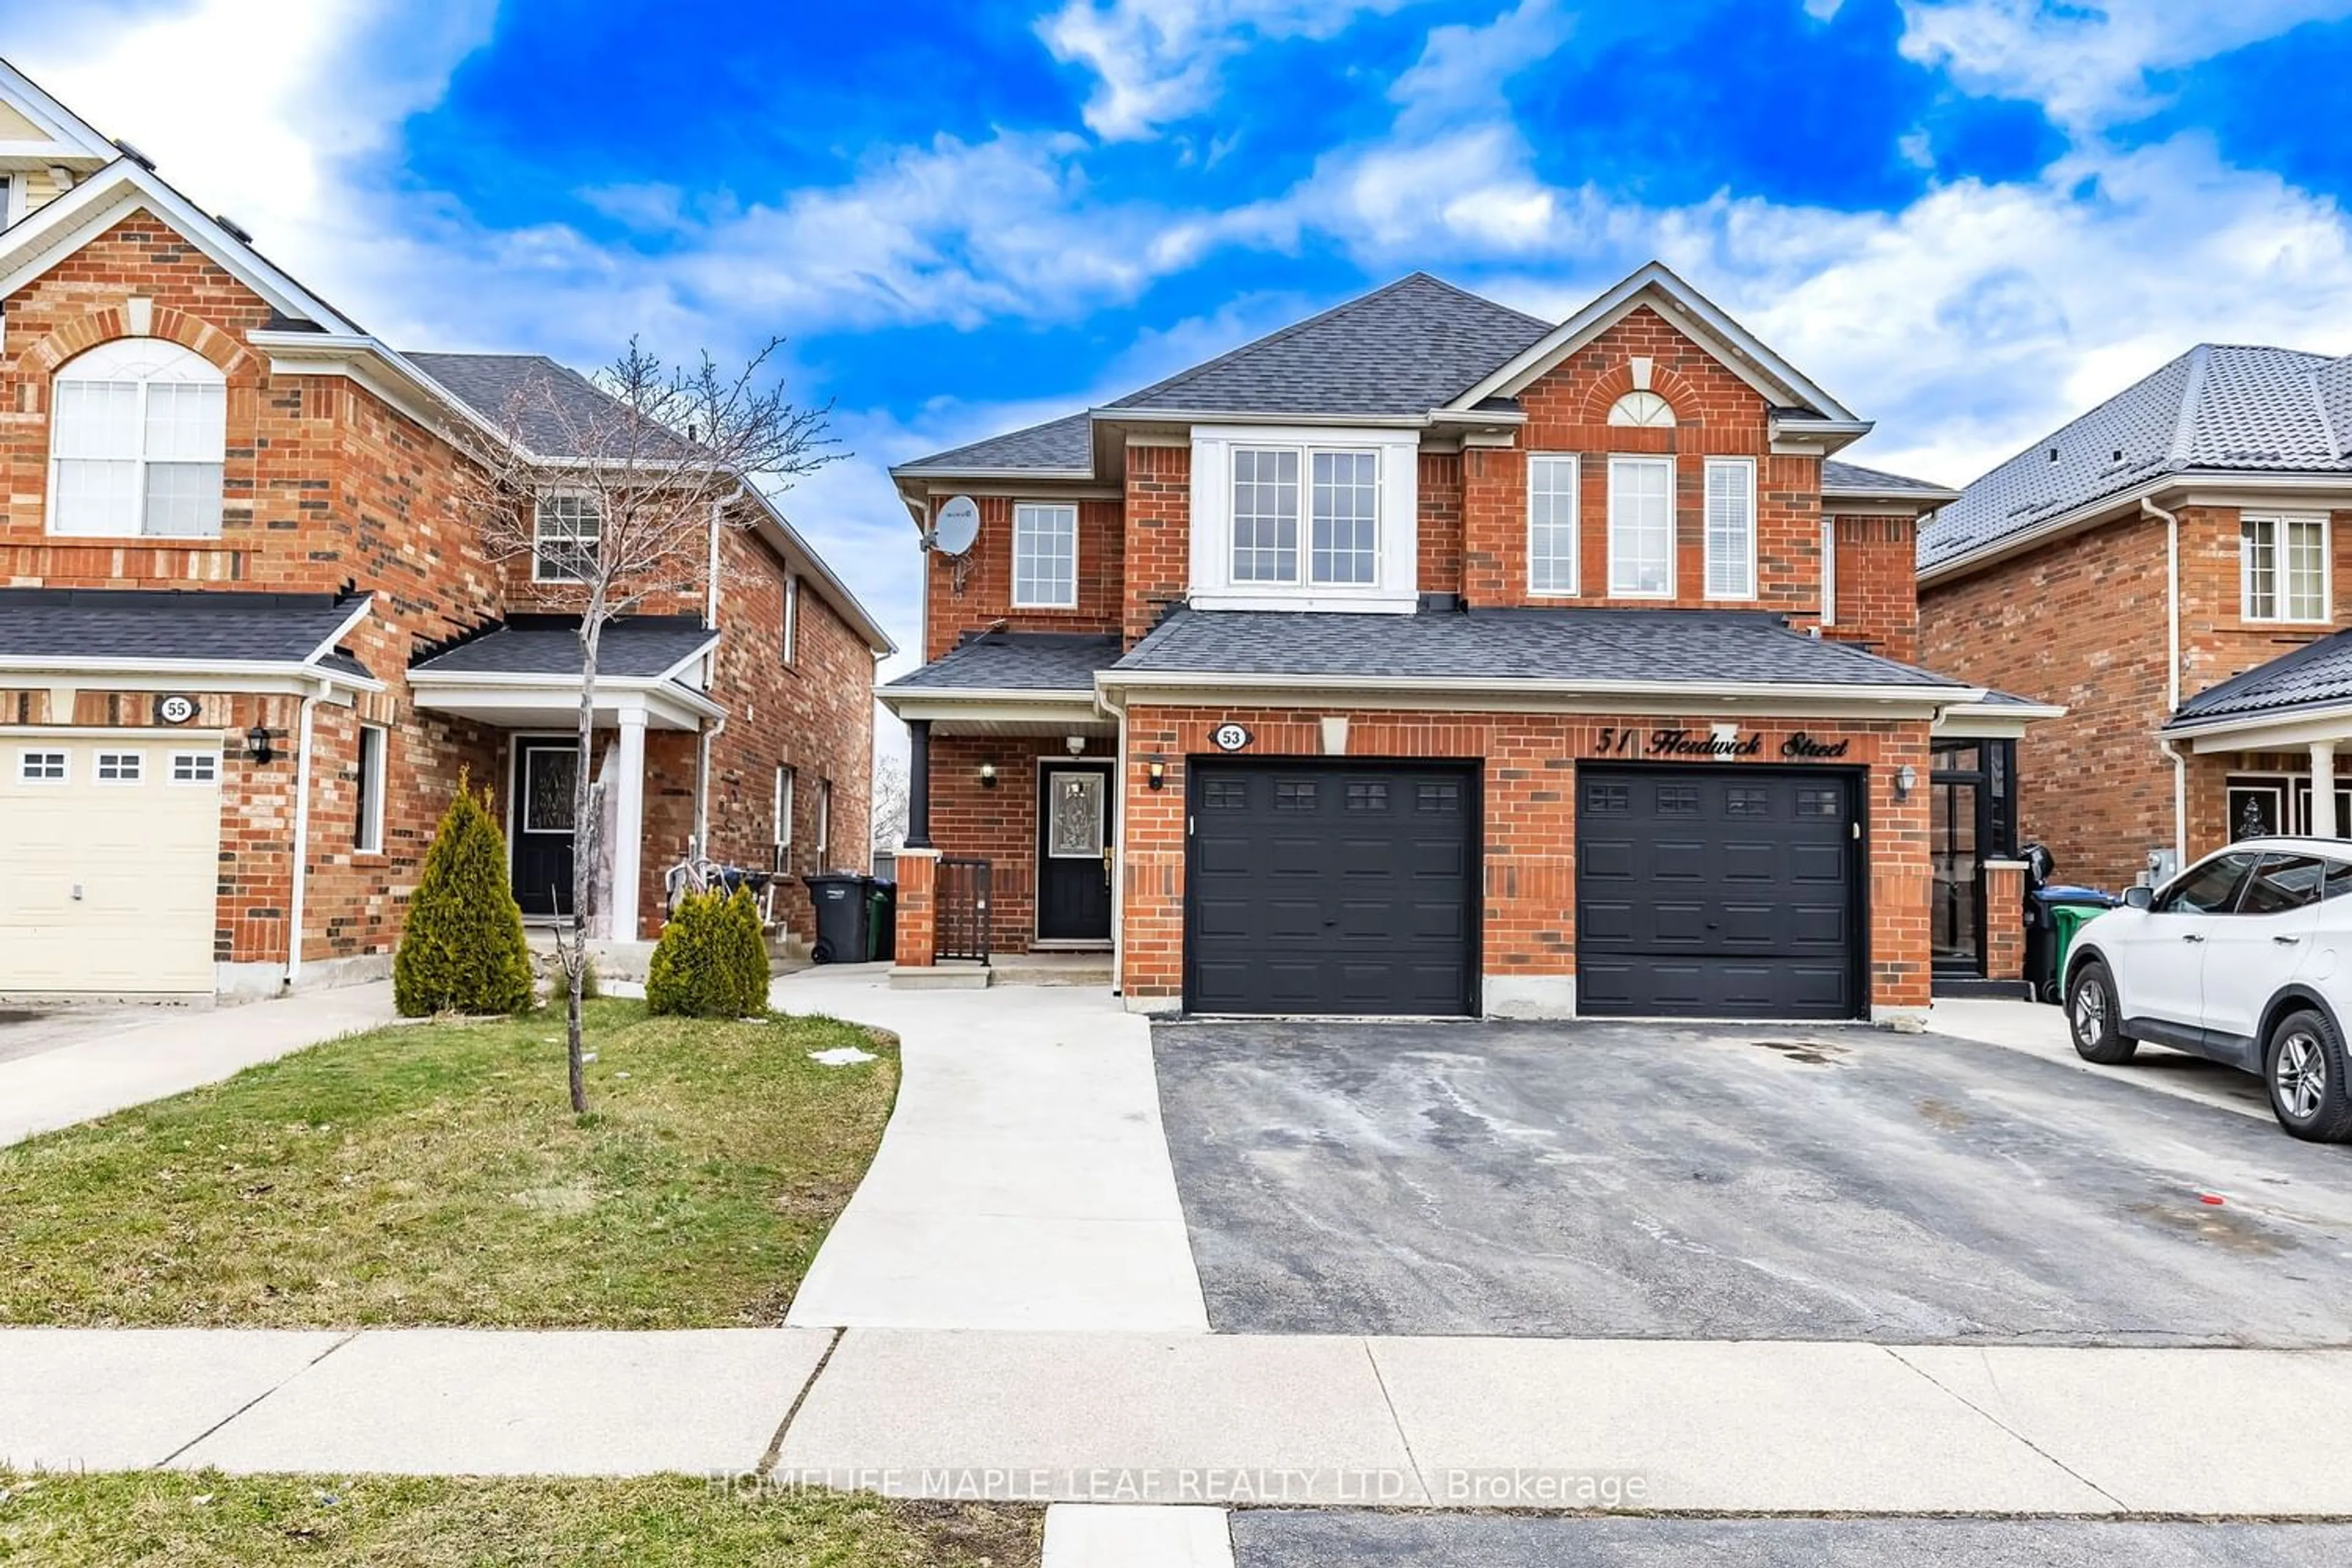 Home with brick exterior material for 53 Herdwick St, Brampton Ontario L6S 6L6